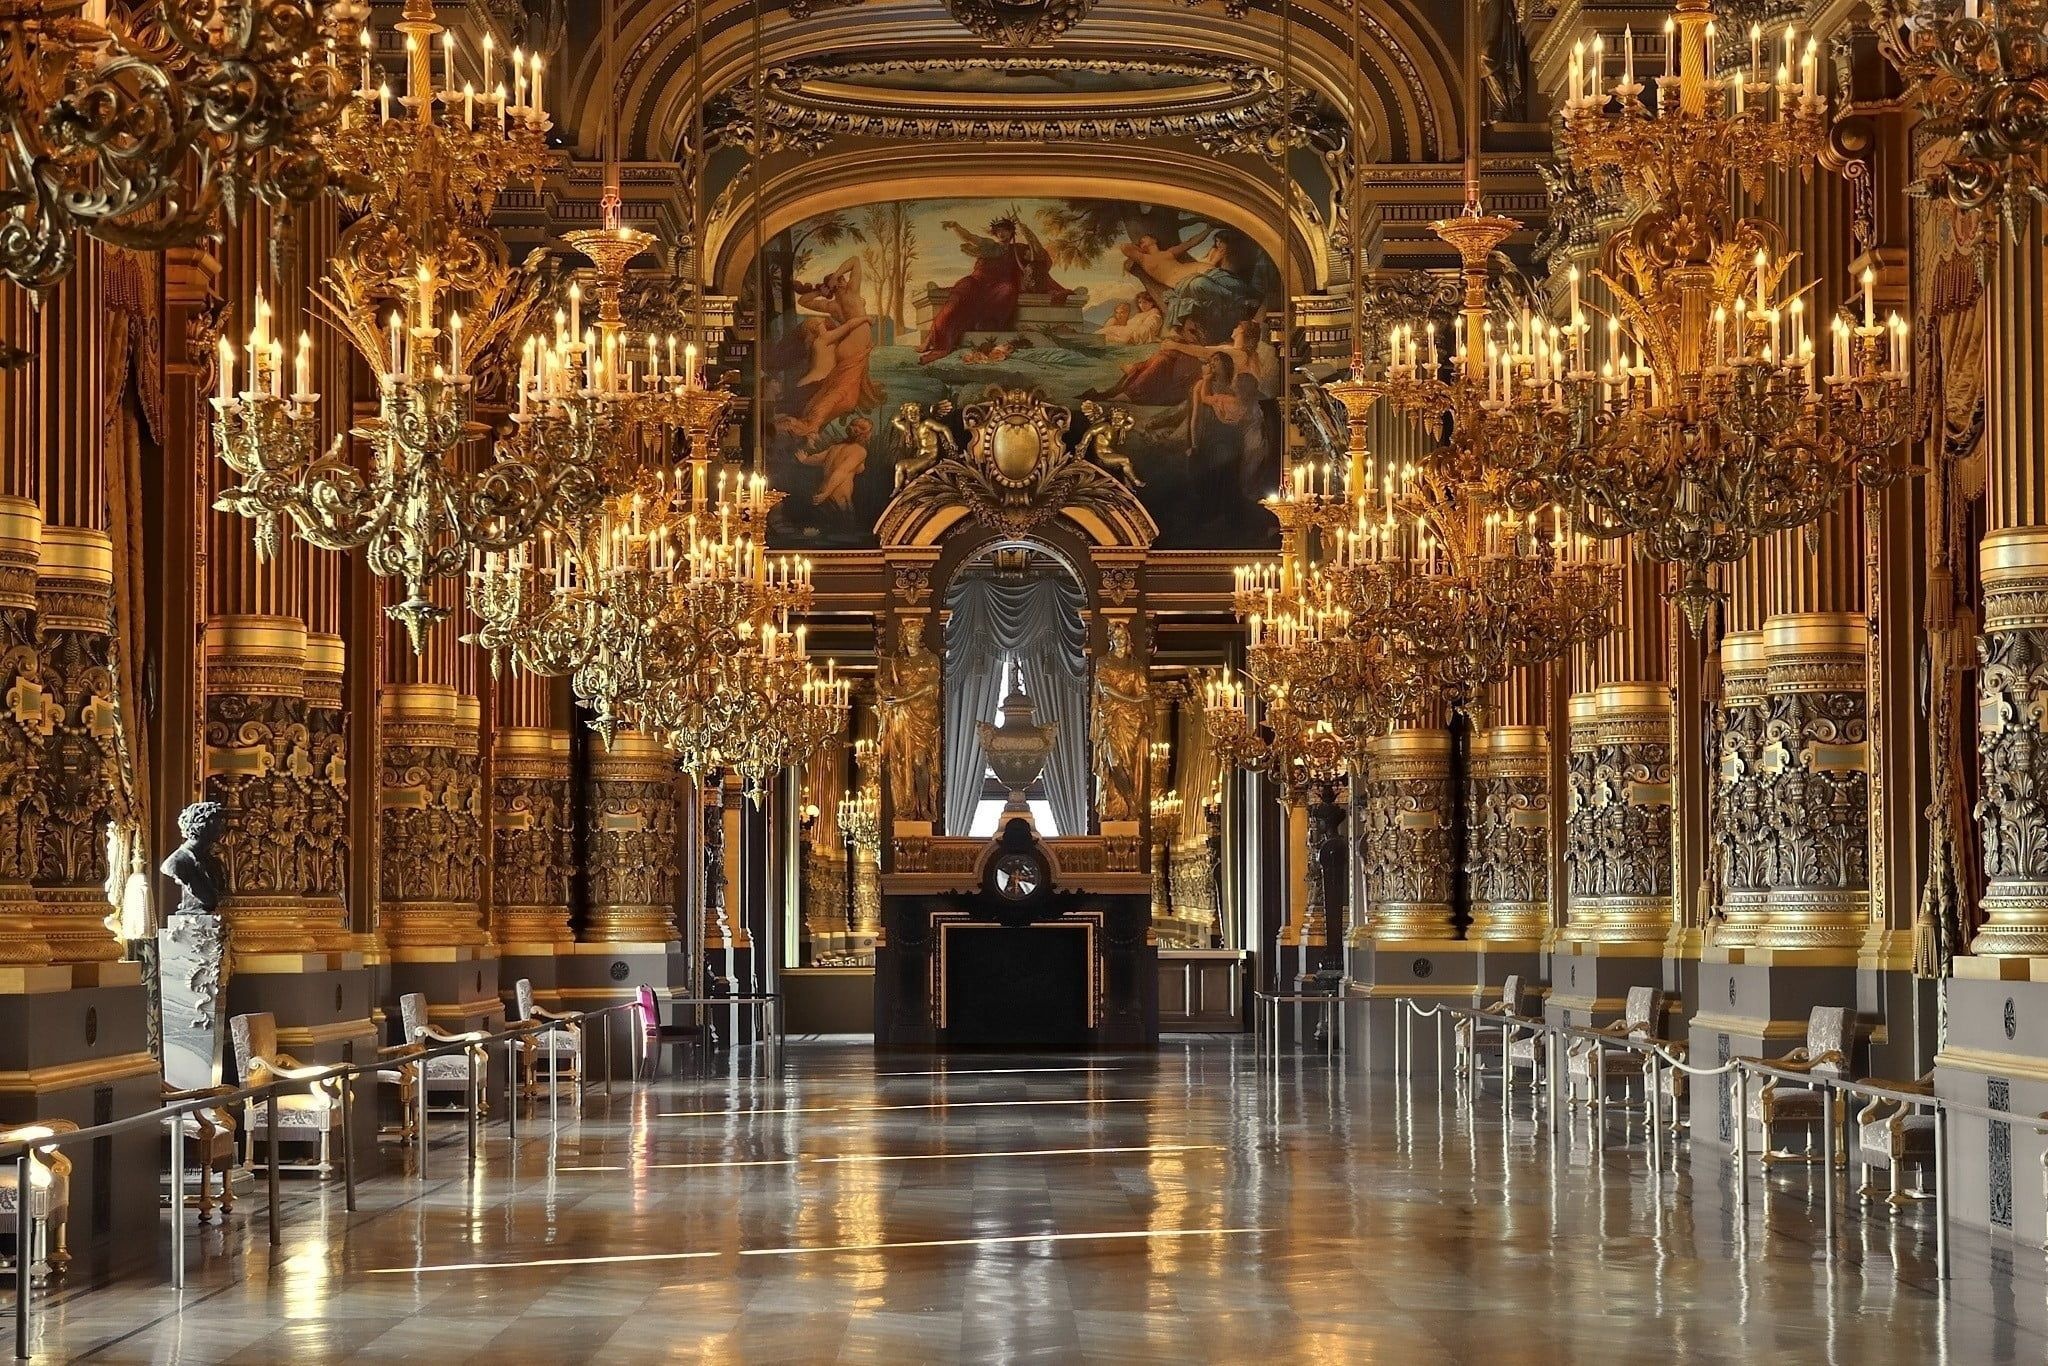 Gold chandelier lot, Buckingham Palace interior, Chandeliers palace, Opera Garnier Paris, 2050x1370 HD Desktop